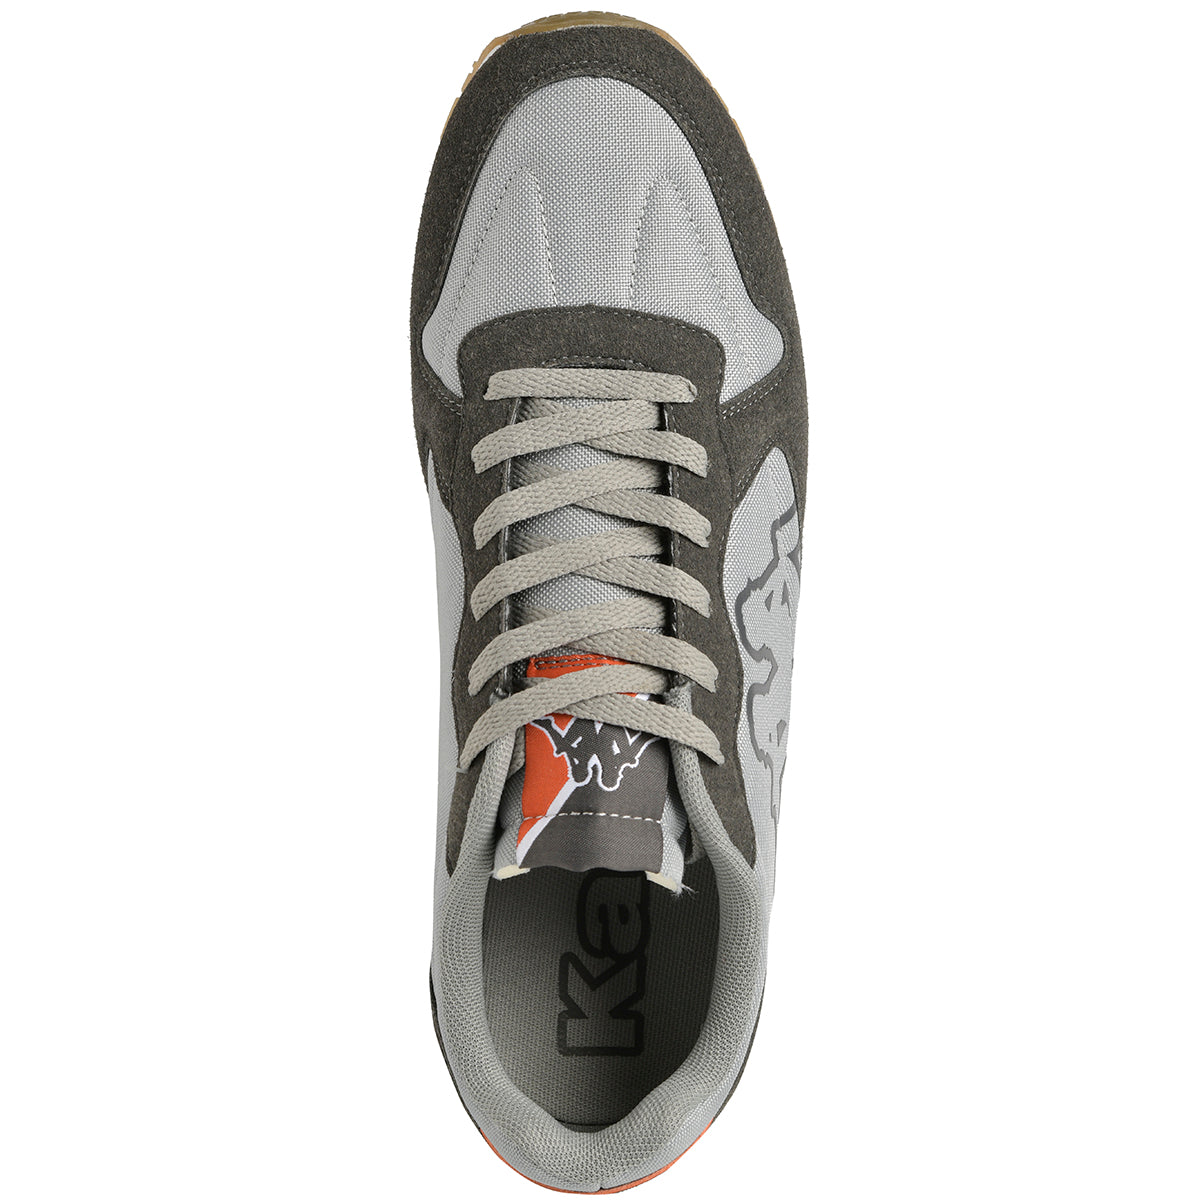 Sneakers Komaya gris homme - Image 4